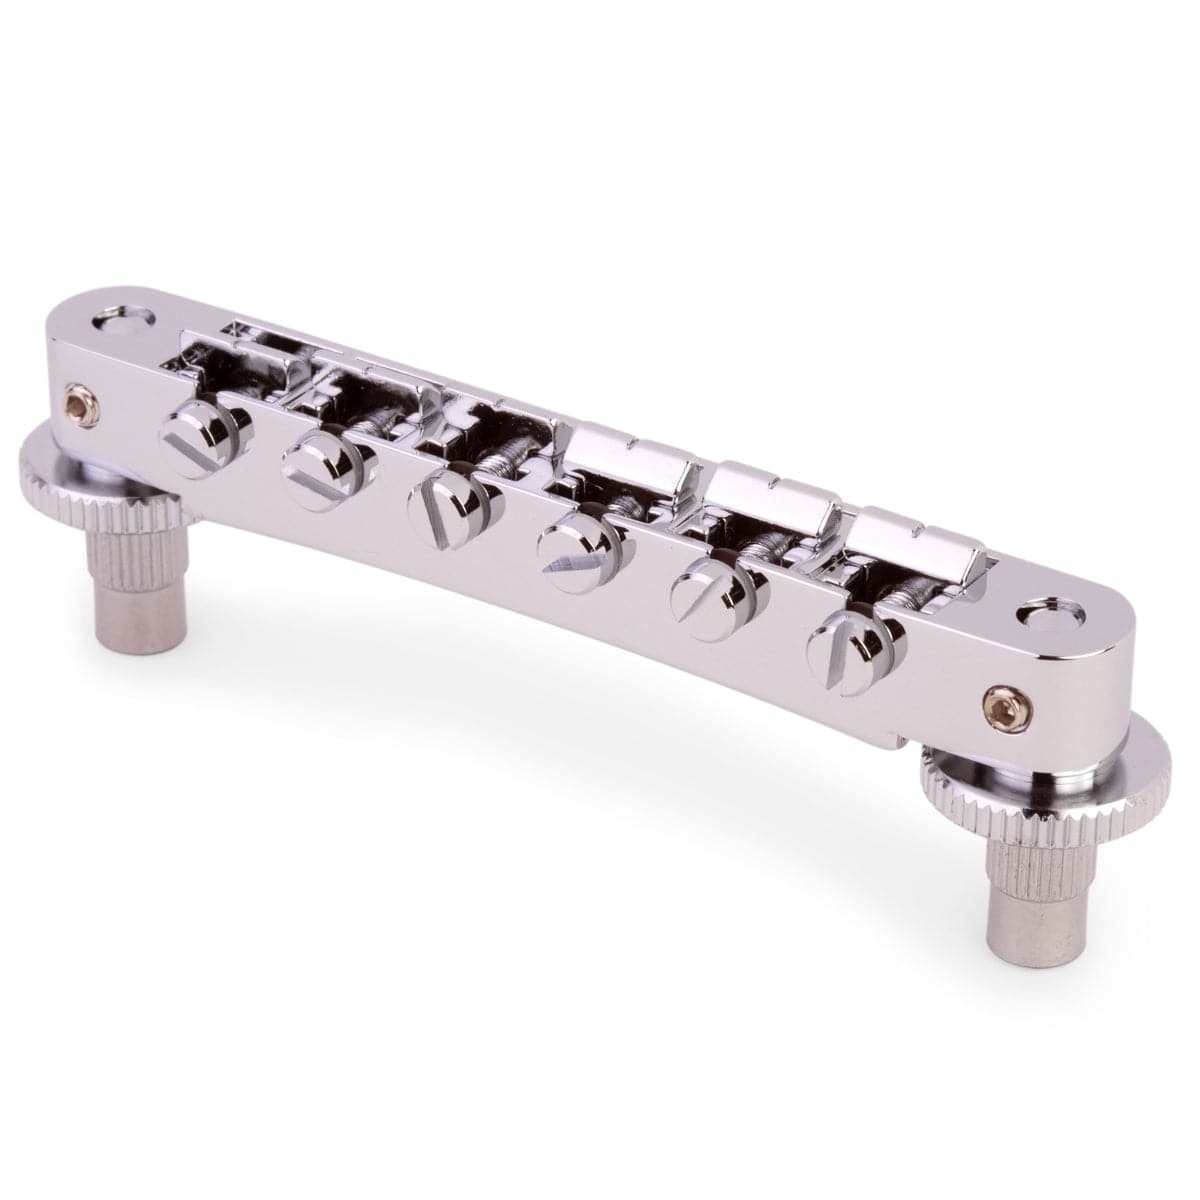 TonePros AVR2 Tune-o-Matic Bridge for Gibson Les Paul / SG - Nickel